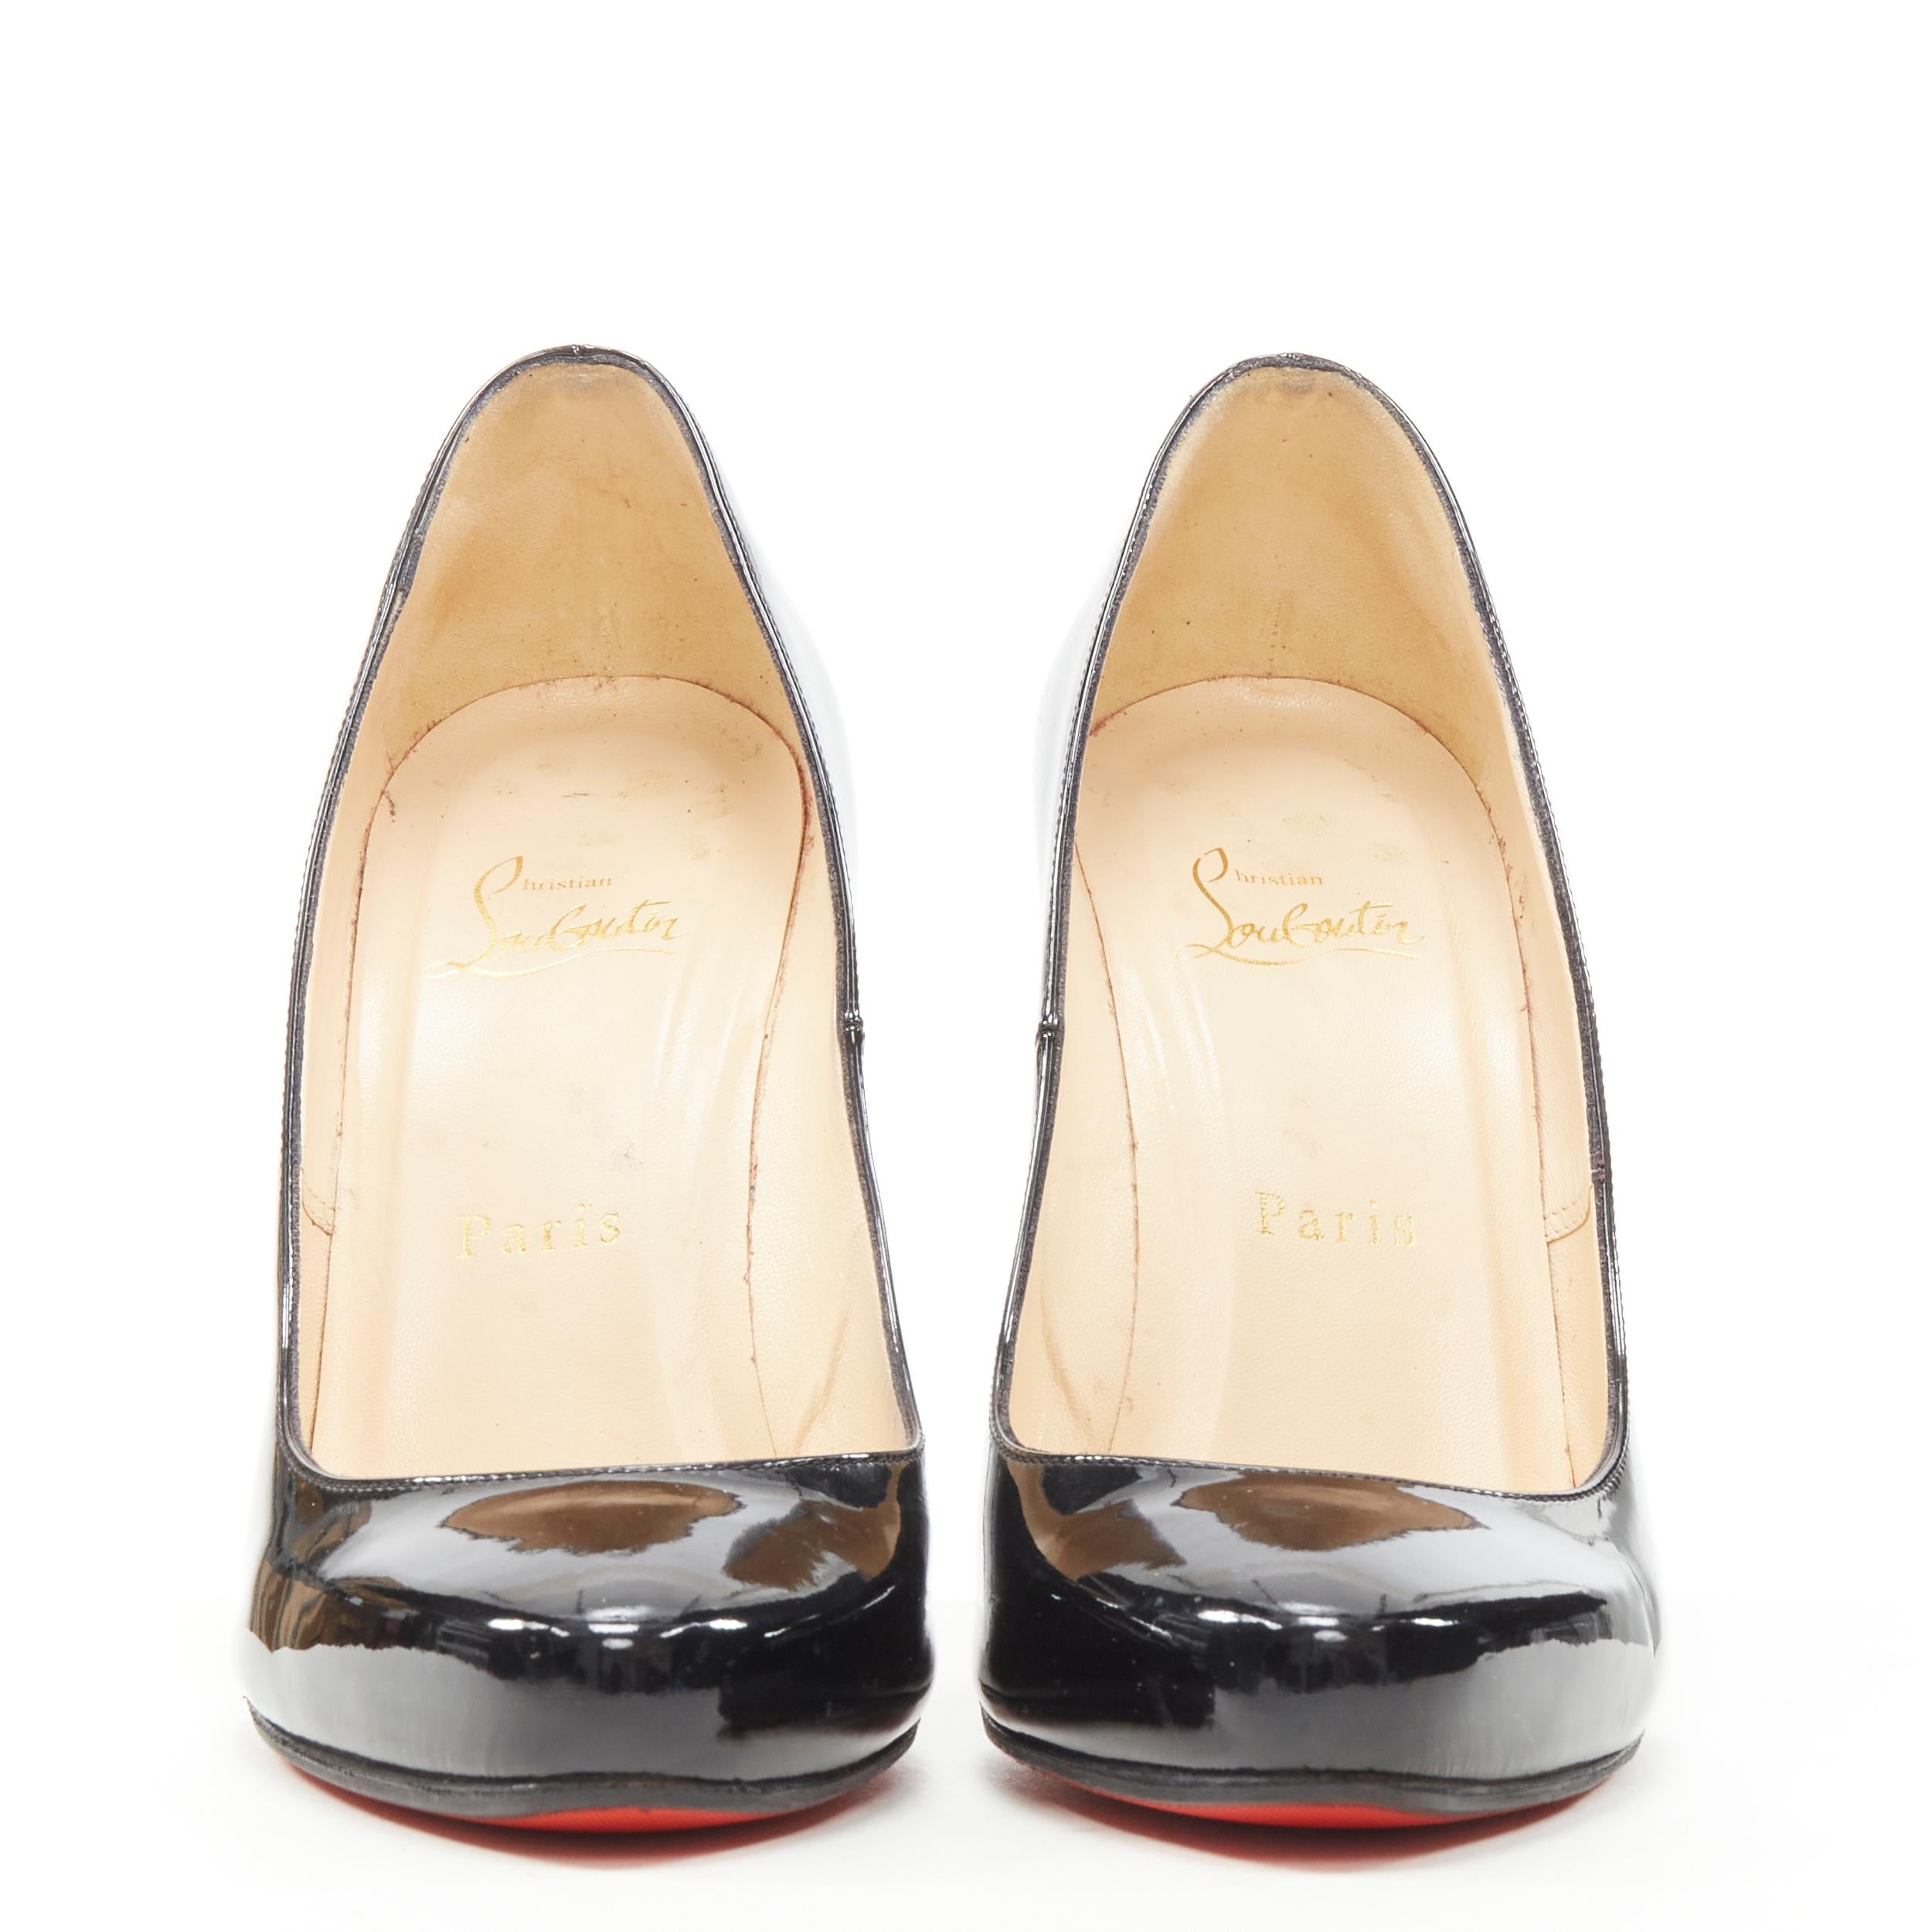 classic stiletto heels